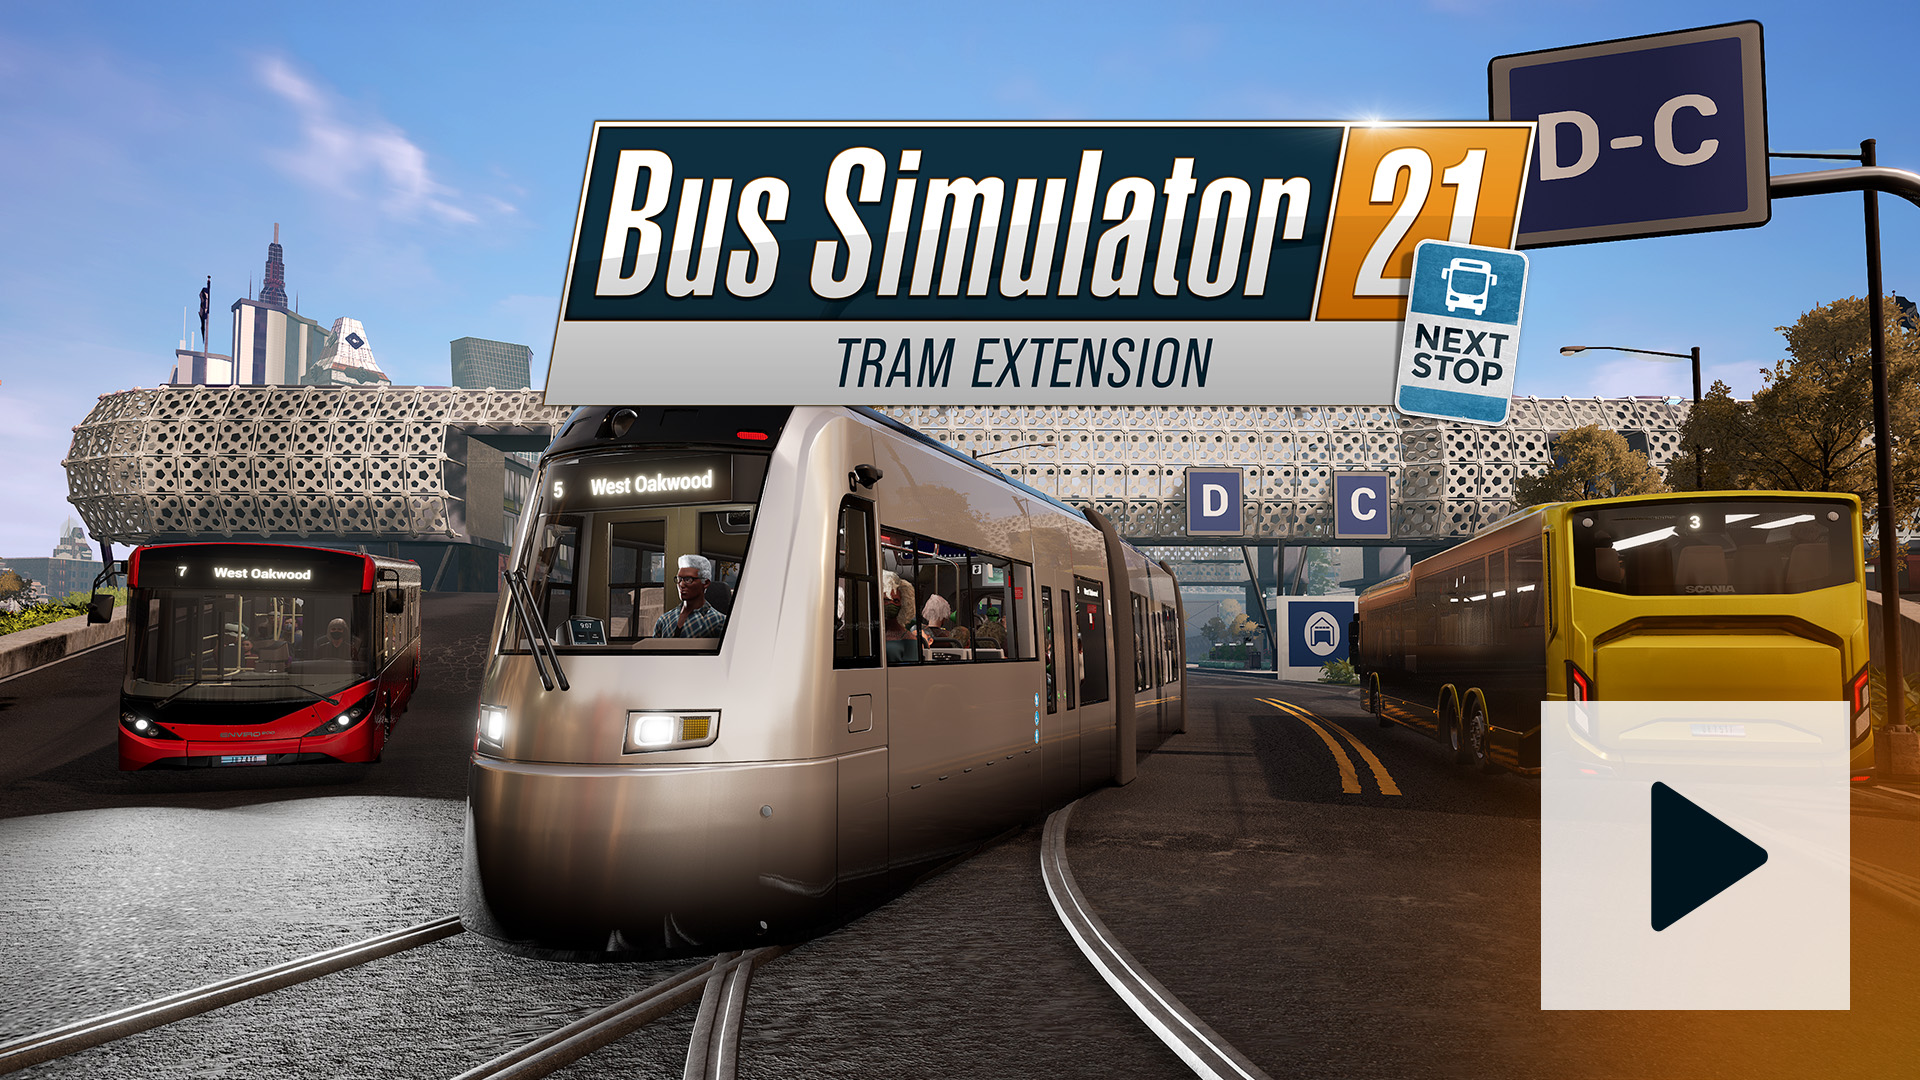 Bus Simulator PreOrder Bundle Xbox One Midia Digital - RIOS VARIEDADES